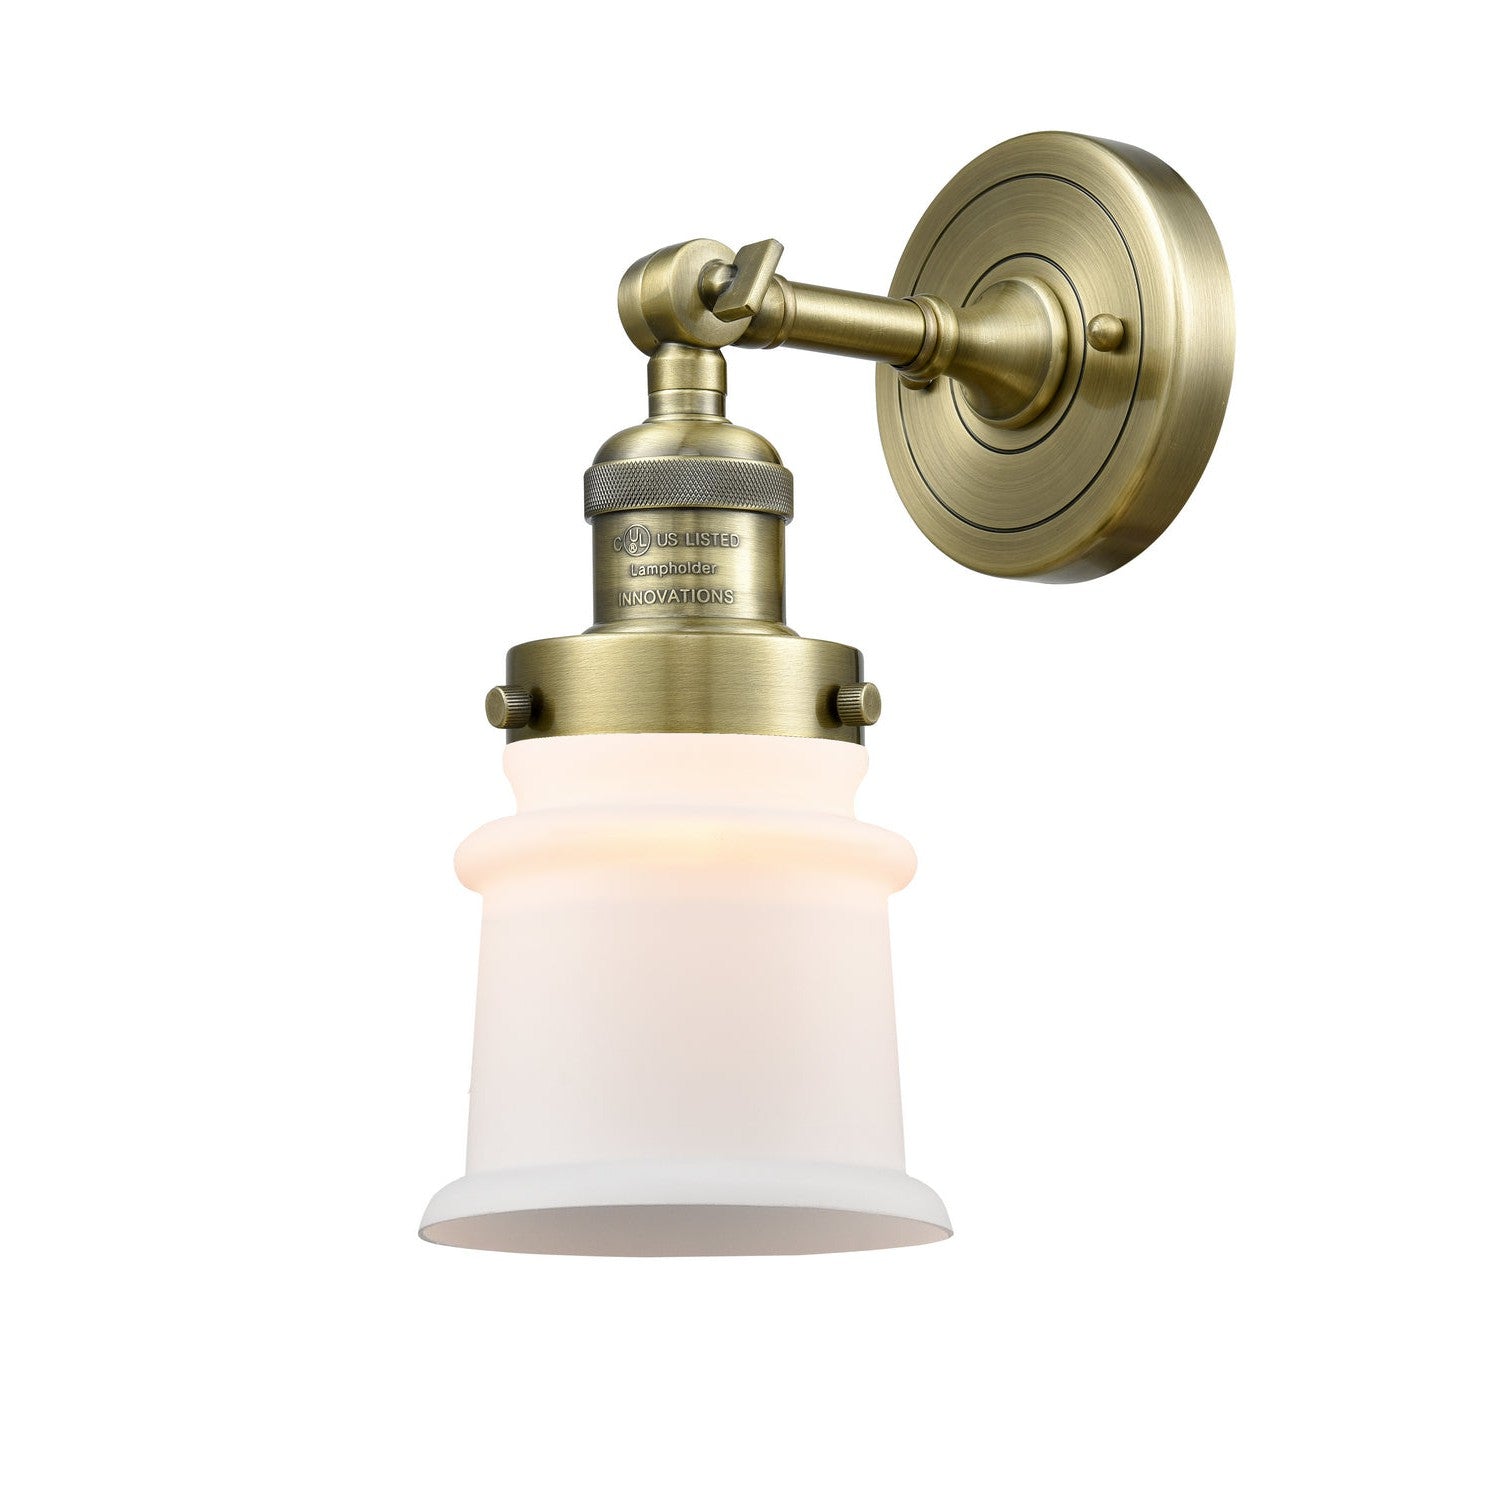 Innovations Franklin Restoration 203-AB-G181S-LED Wall Sconce Light - Antique Brass